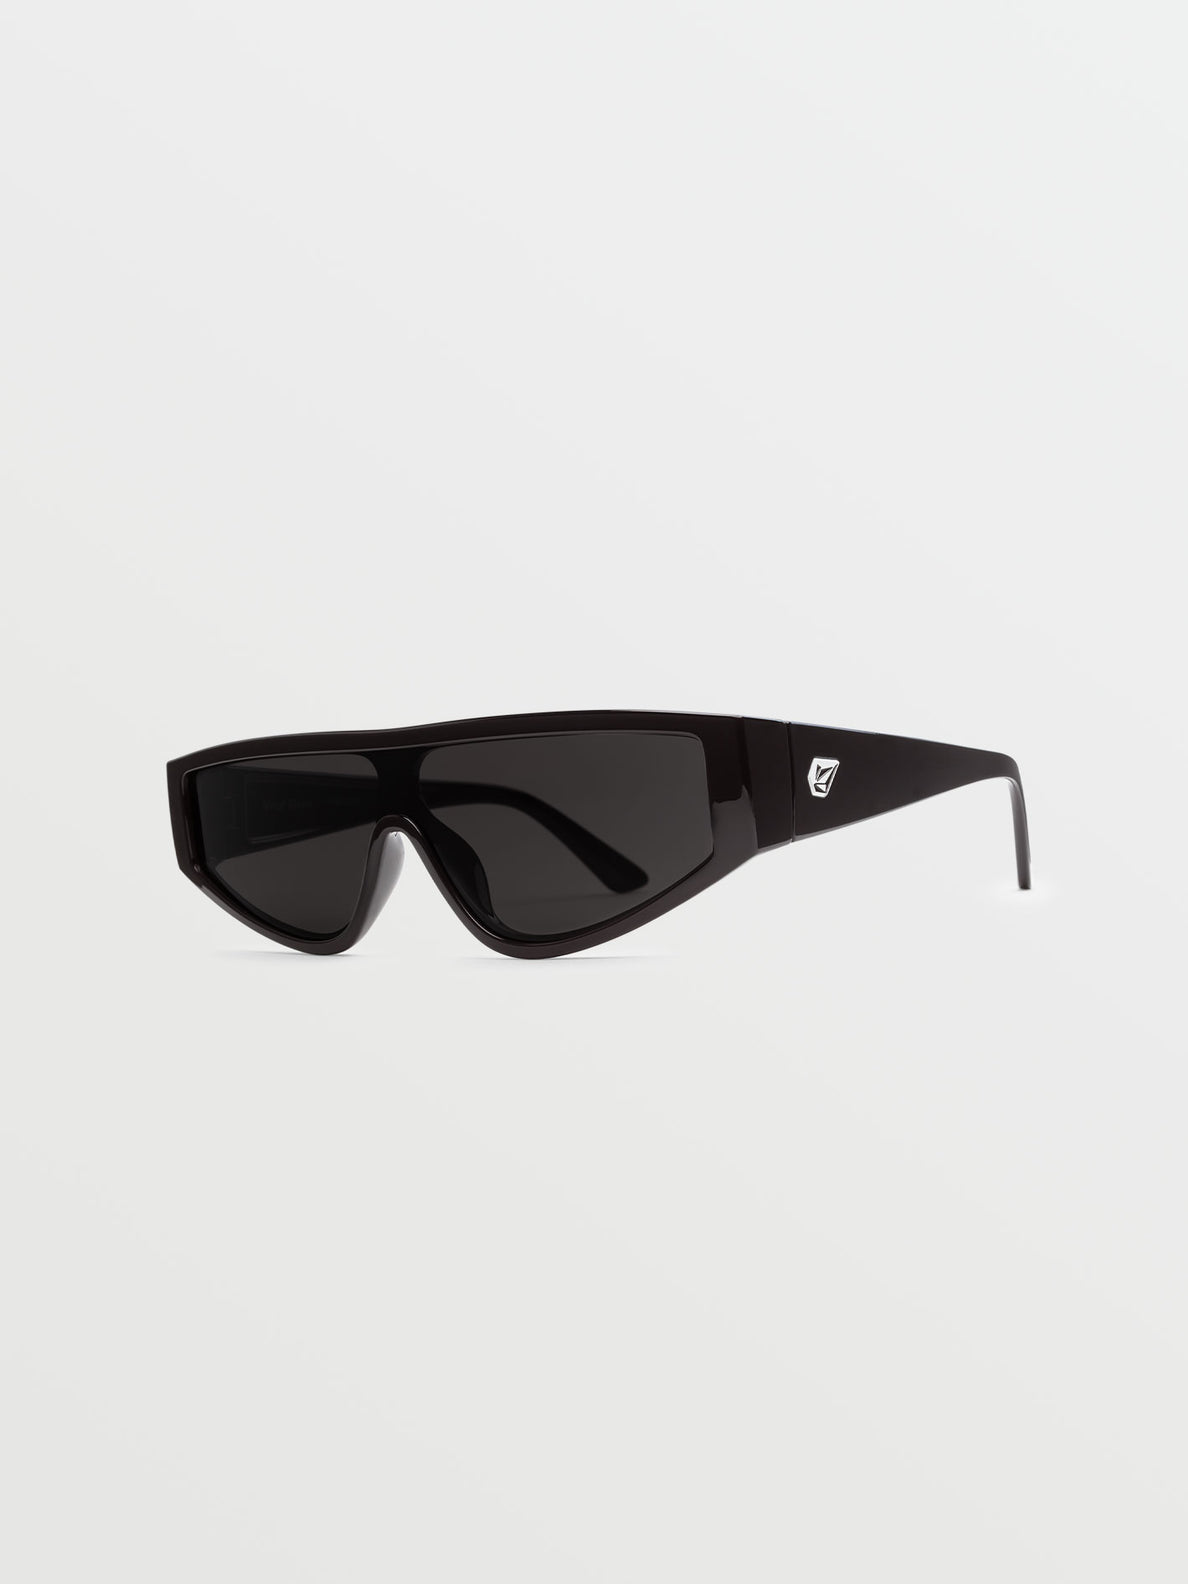 Vinyl Glaze Sunglasses - Grey Gloss Black